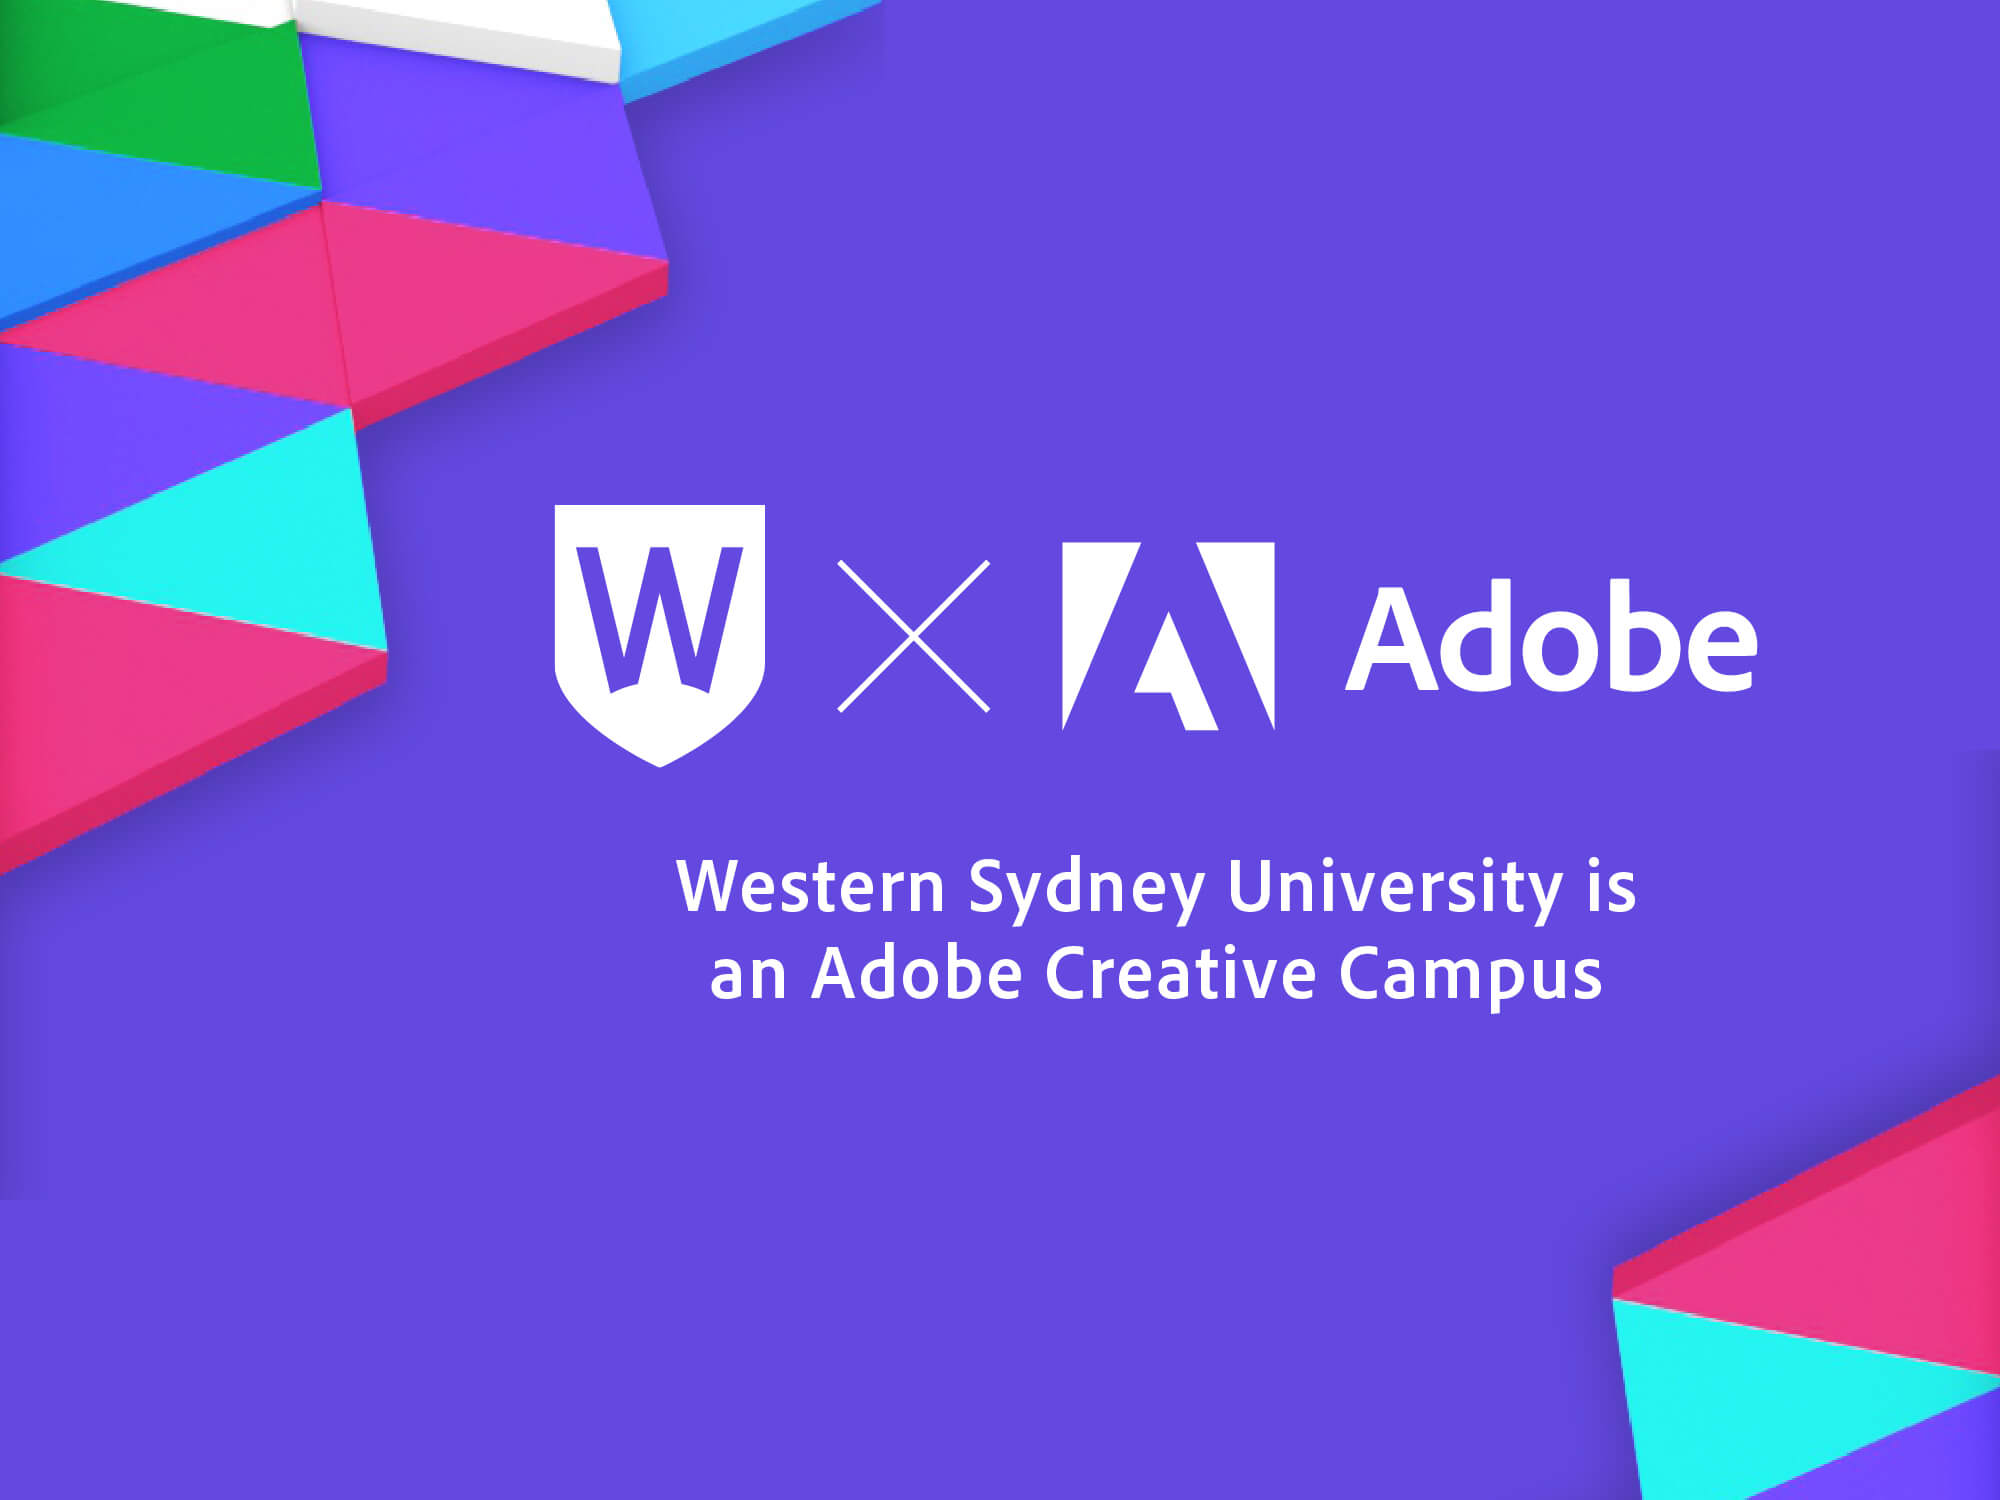 Western Sydney University is an Adobe Creative Campus